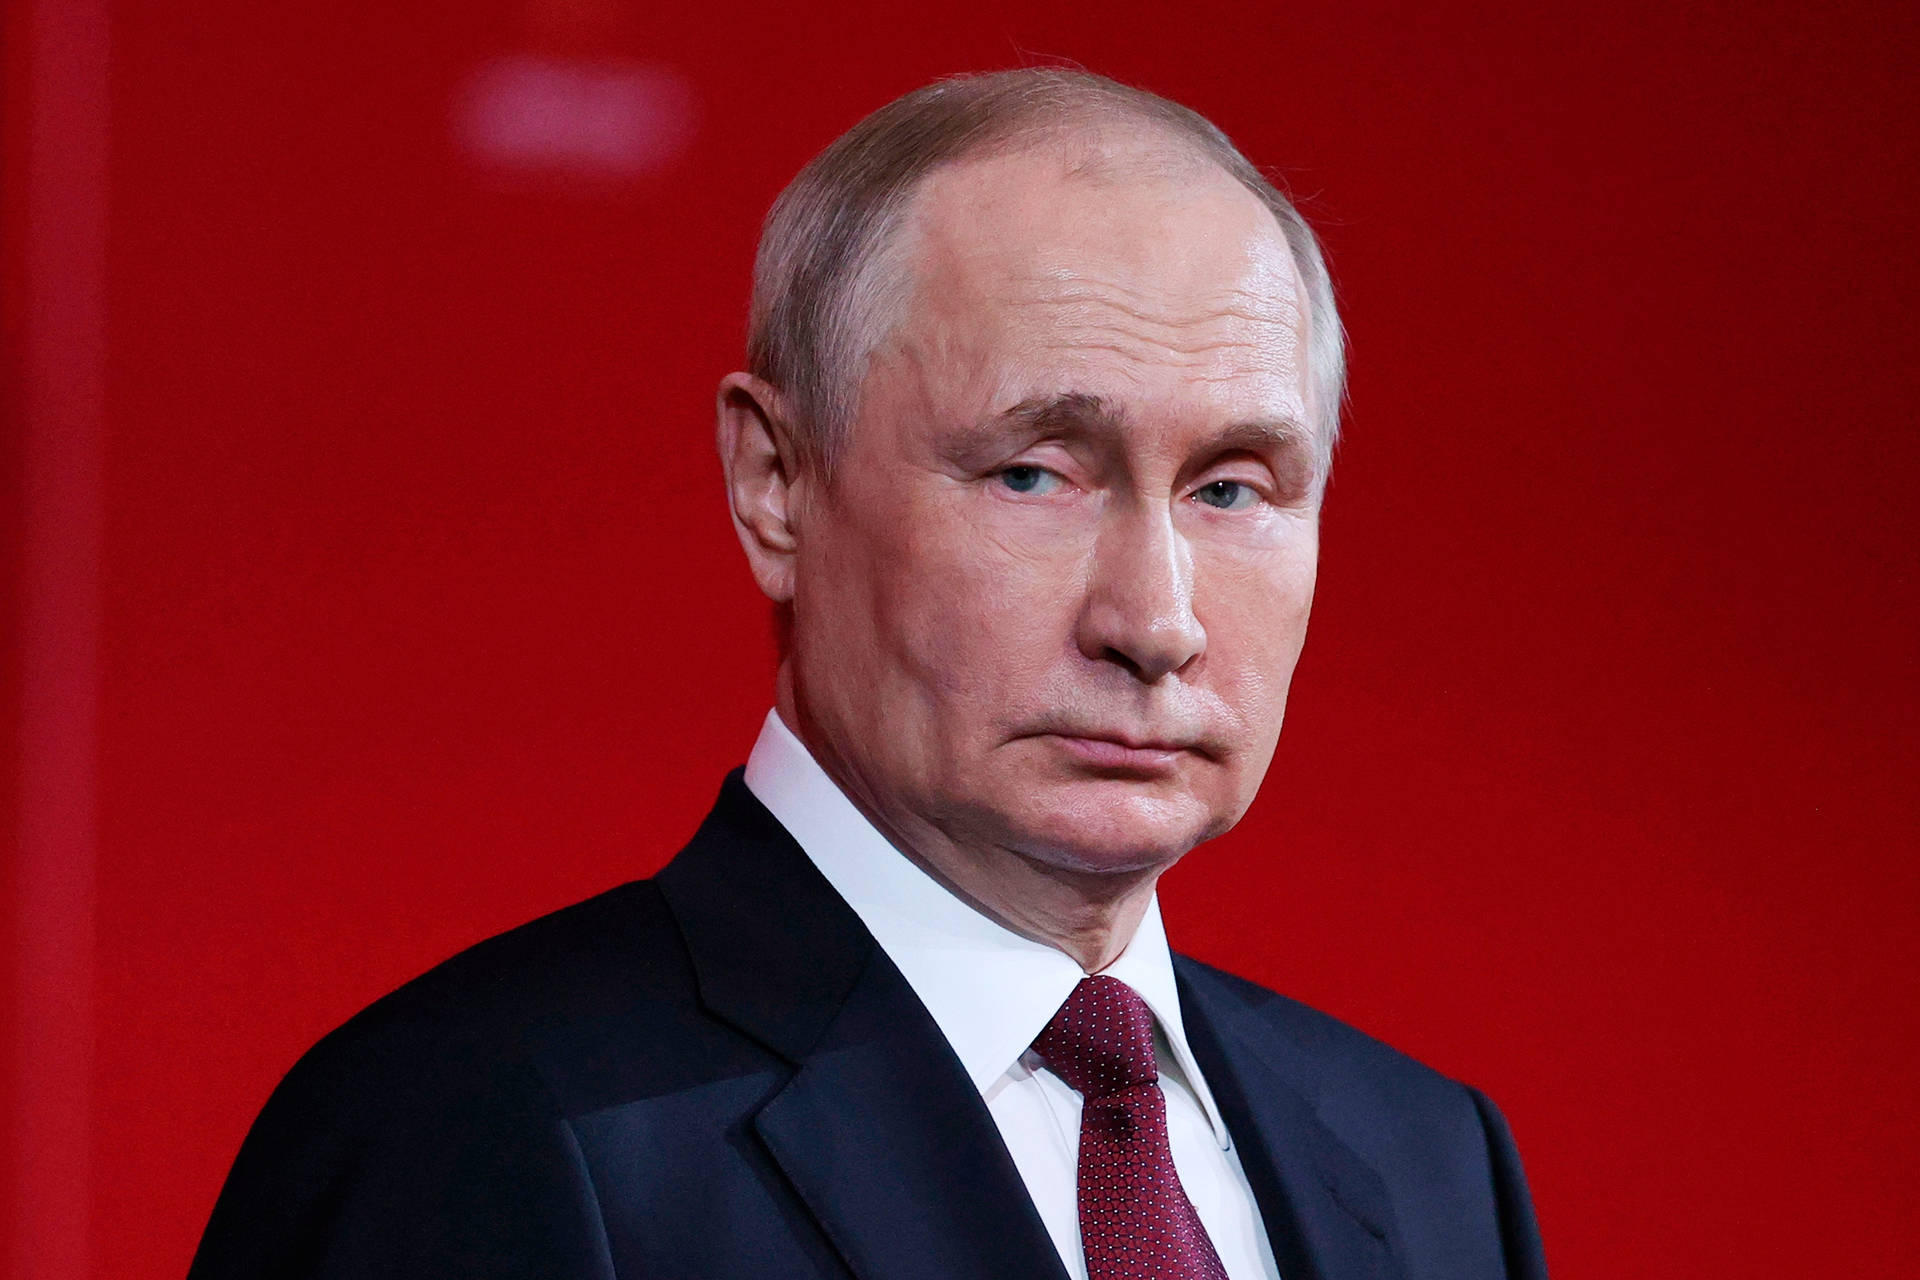 Vladimir Putin Against Blurry Red Backdrop Wallpaper